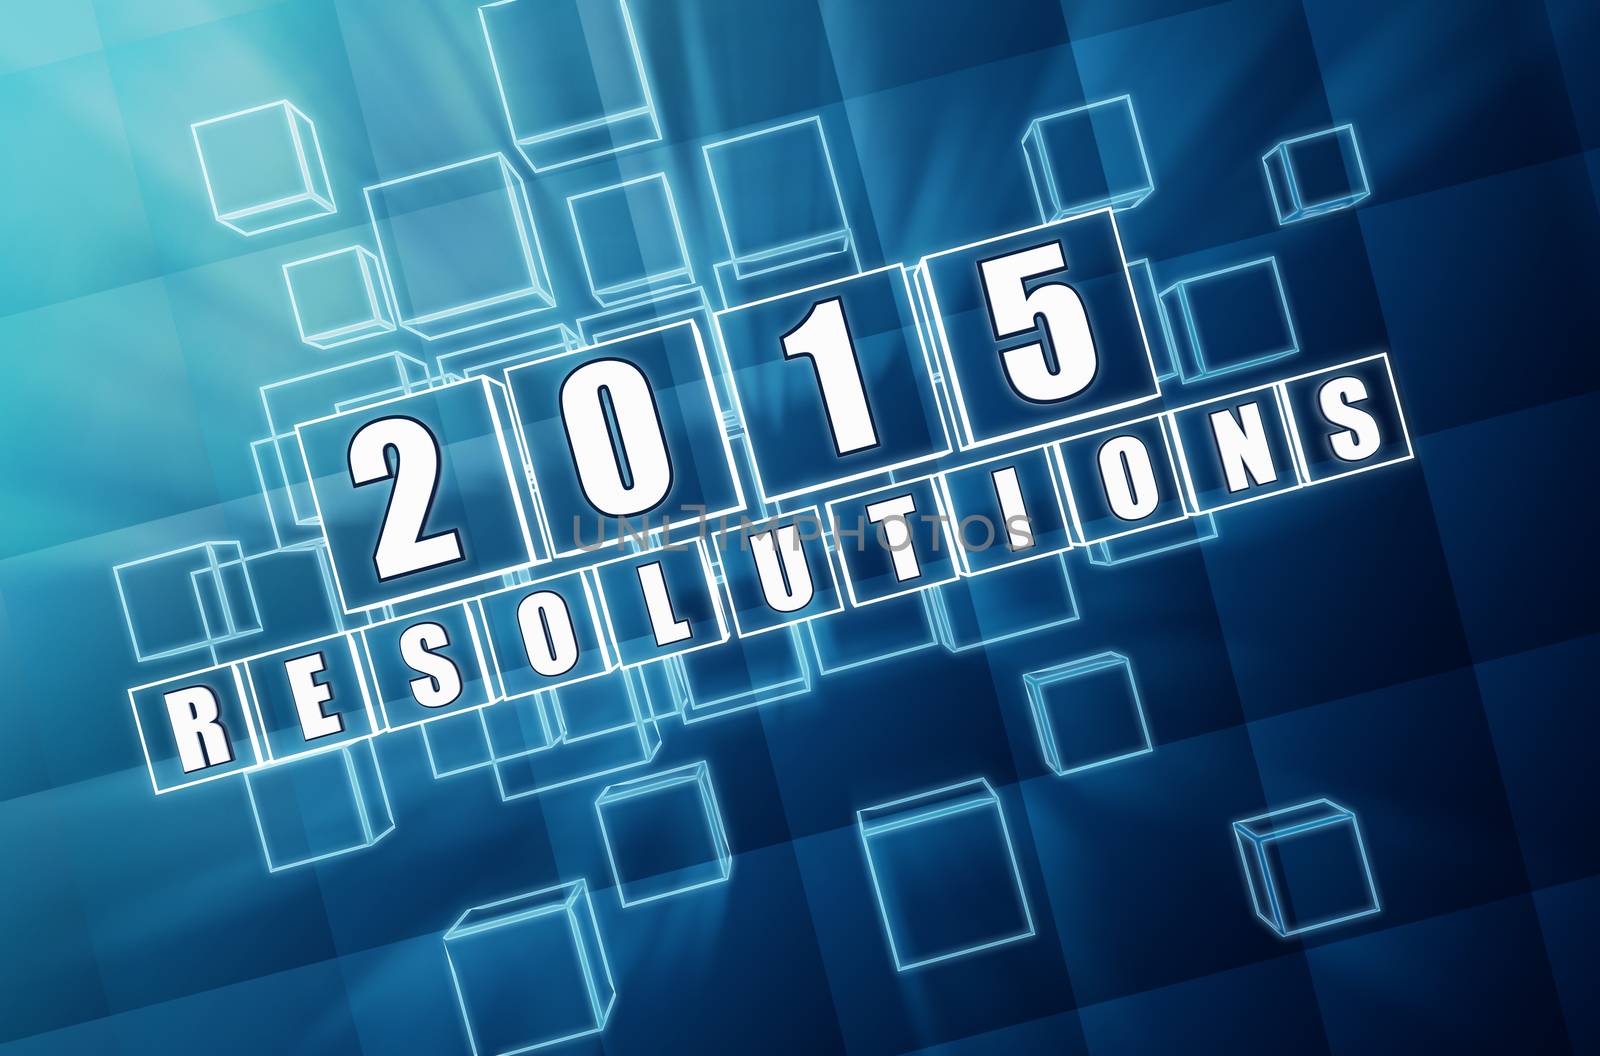 2015 resolutions by marinini